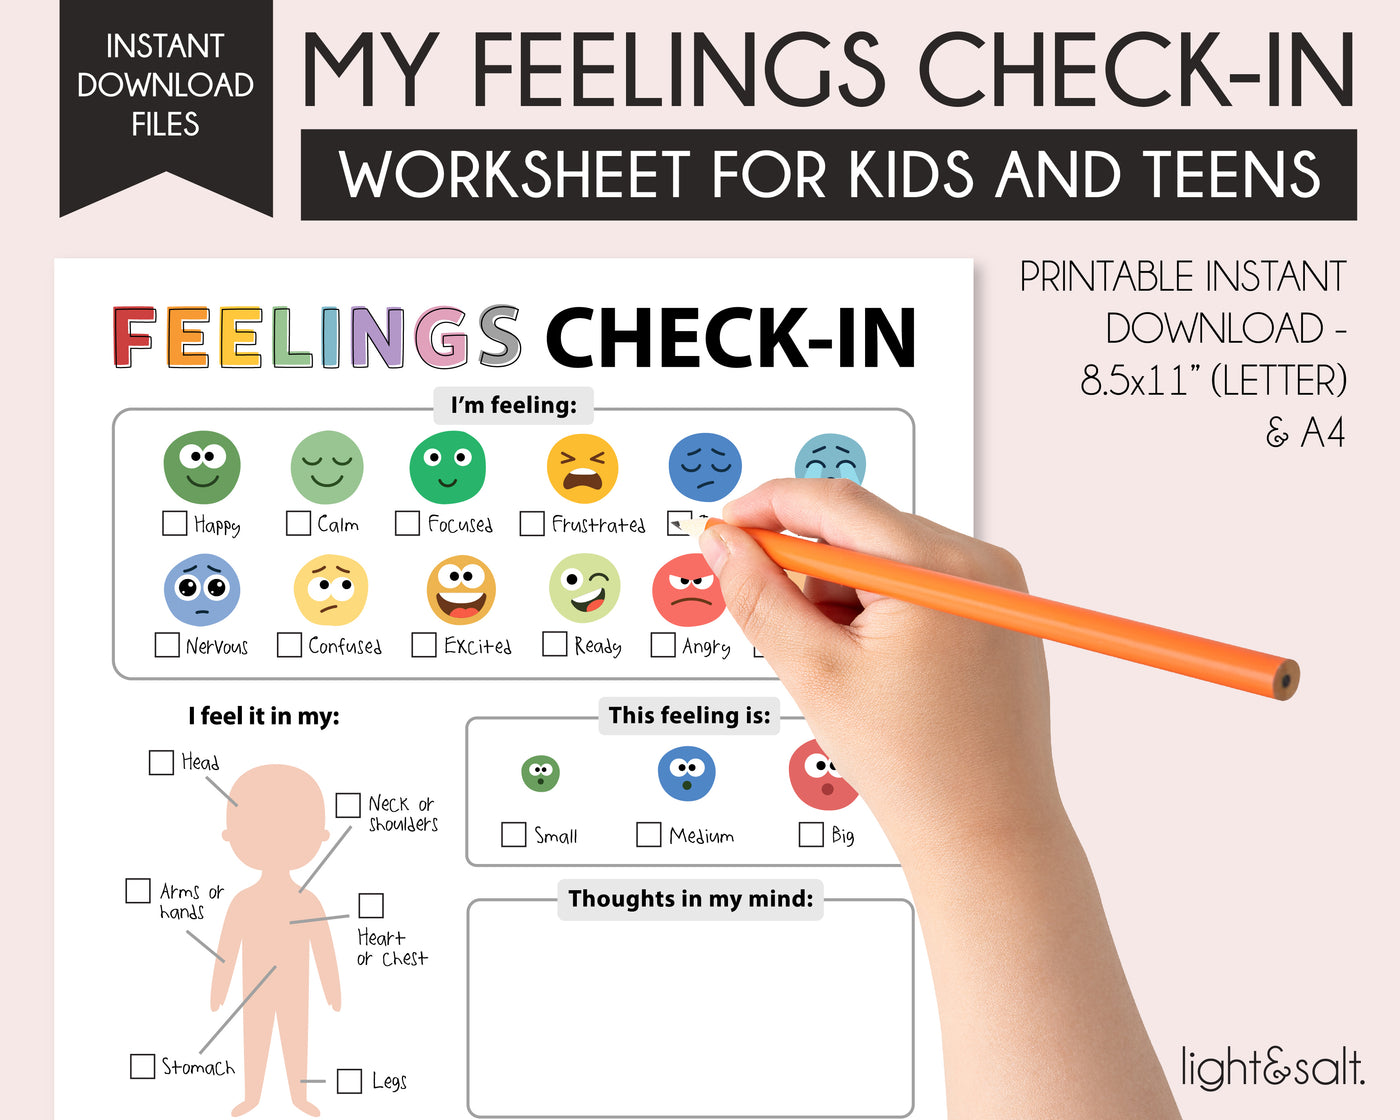 Feelings check-in worksheet for teens and kids